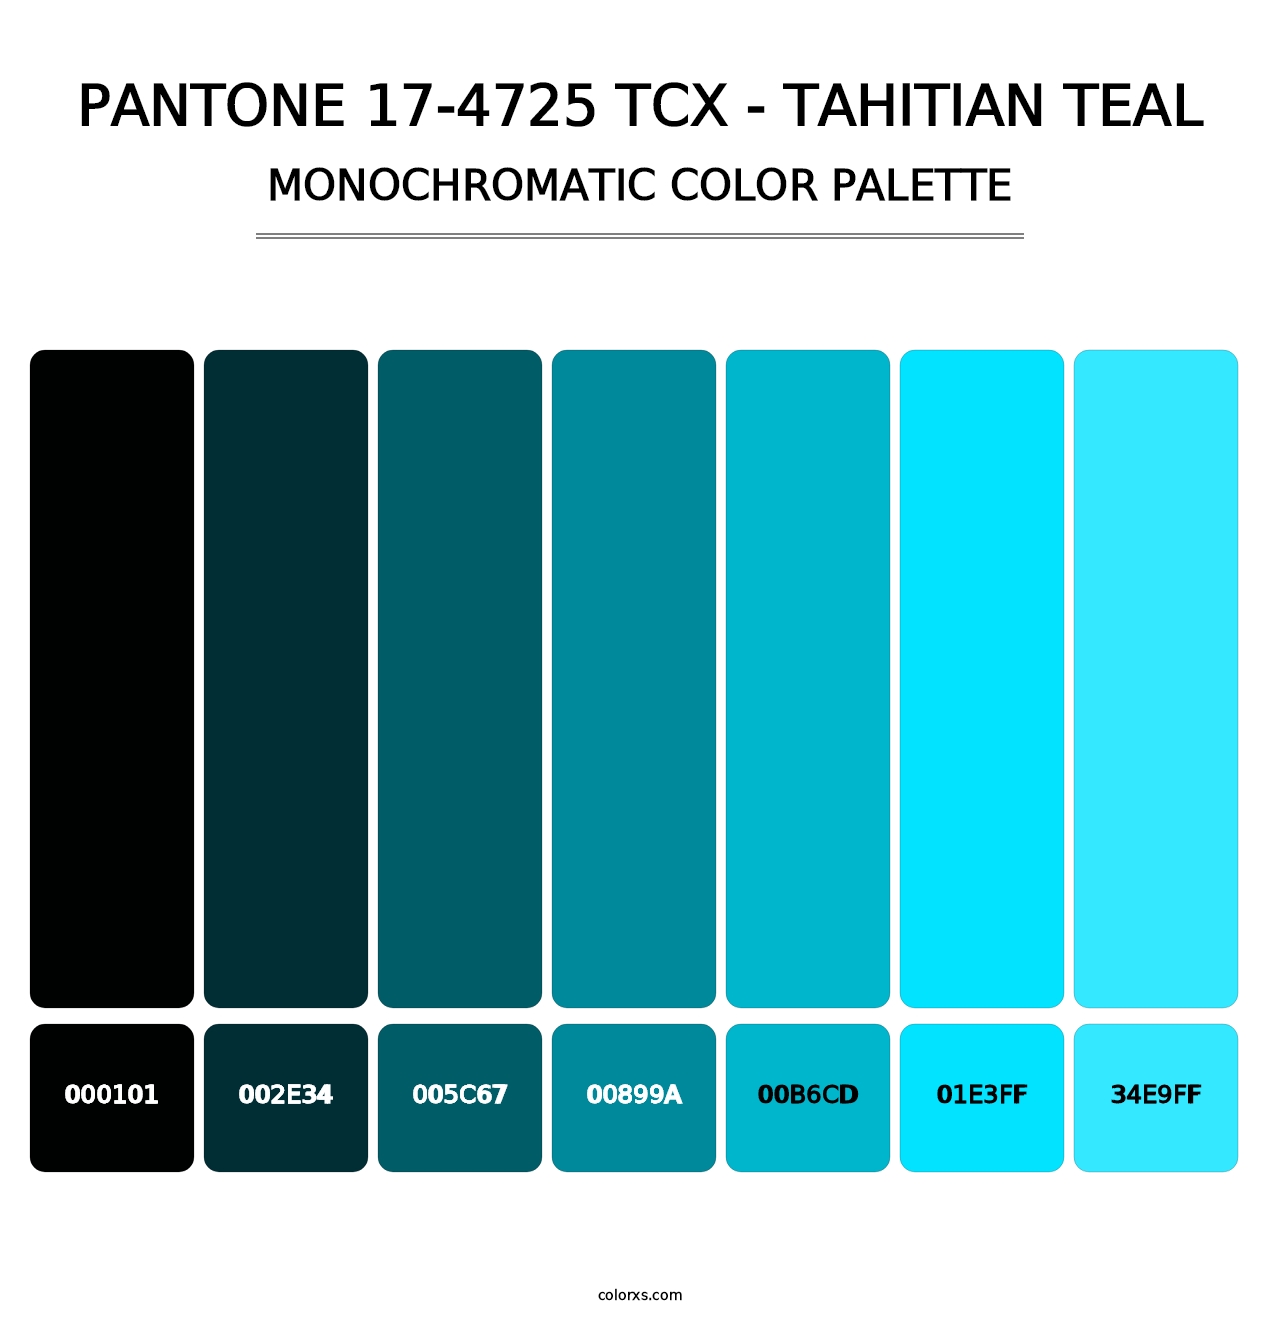 PANTONE 17-4725 TCX - Tahitian Teal - Monochromatic Color Palette